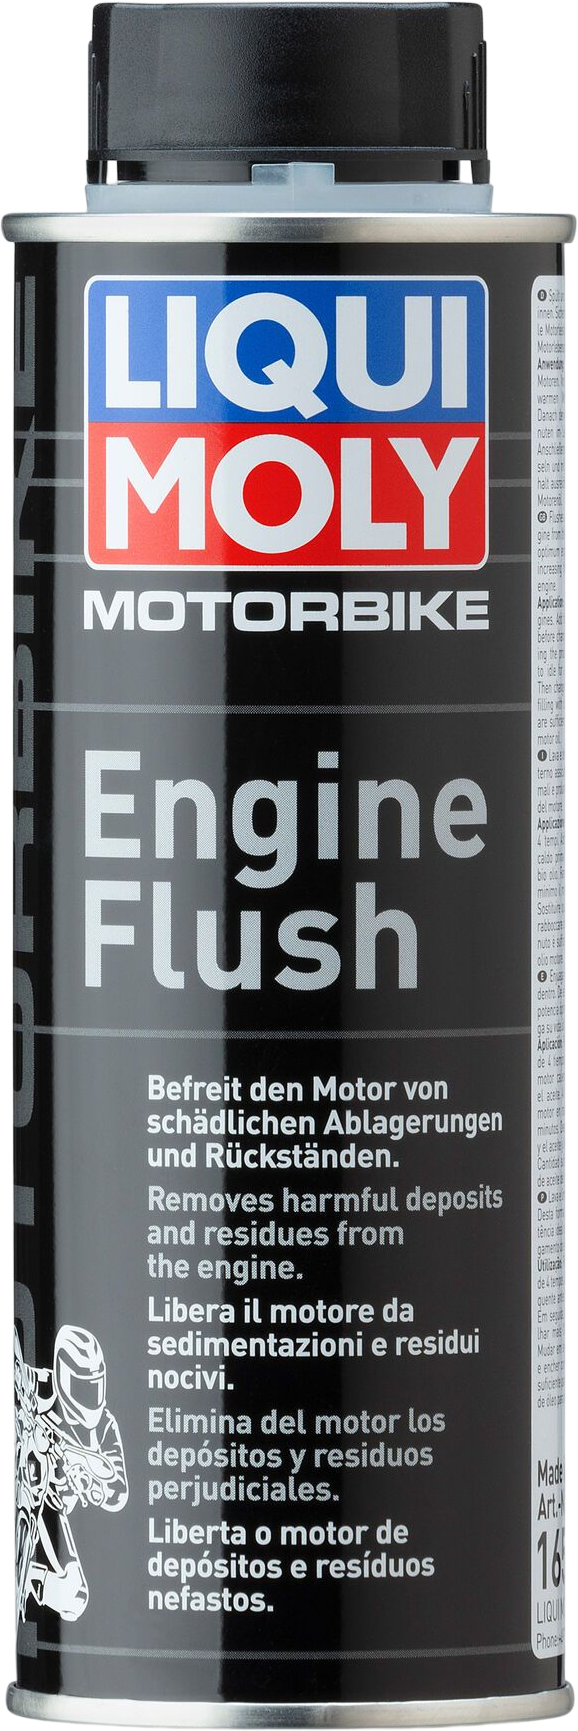 Liqui Moly Motorbike Engine Flush, 6 x 250 ml detail 2